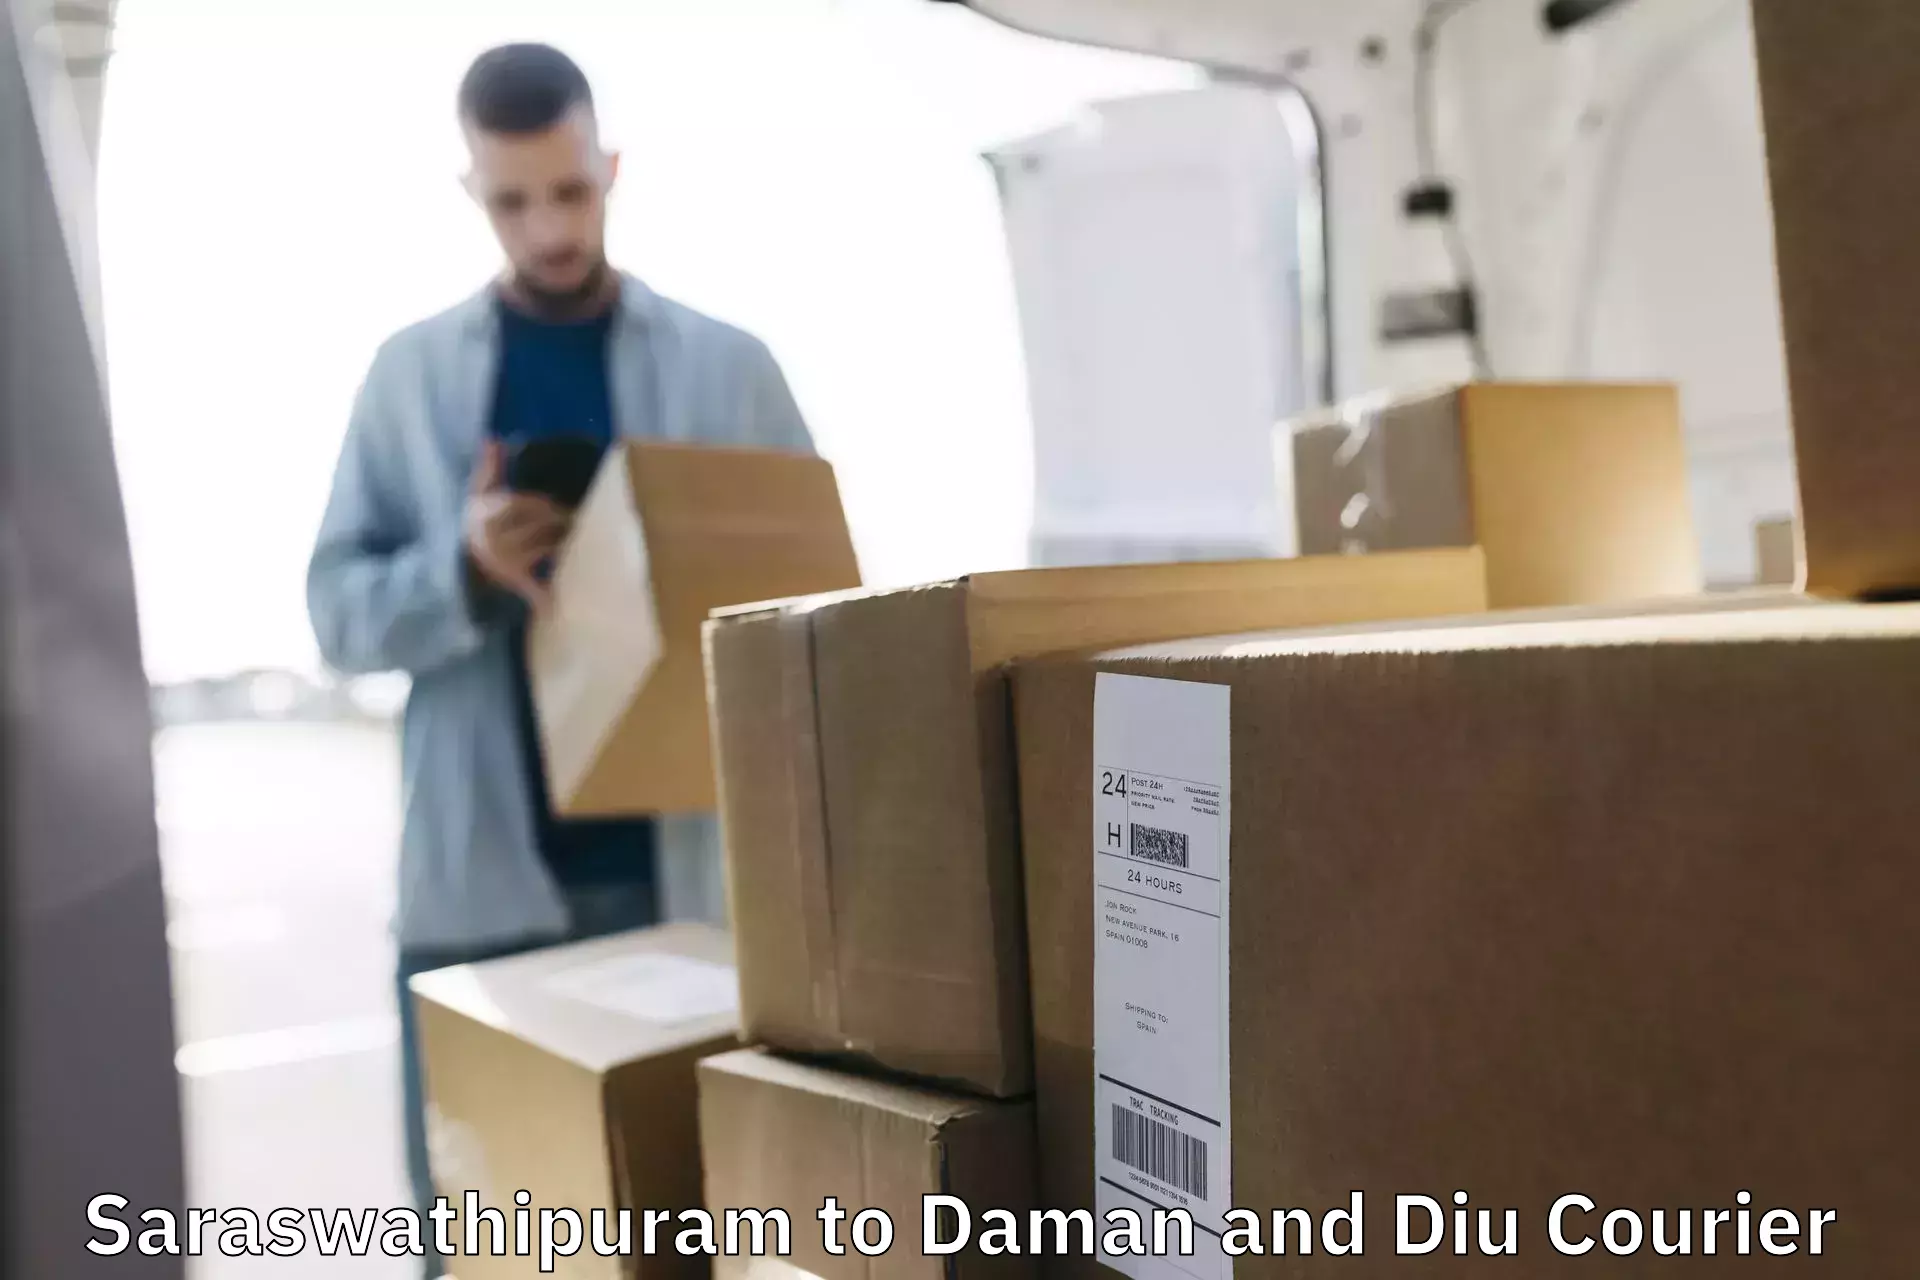 Courier service comparison Saraswathipuram to Daman and Diu